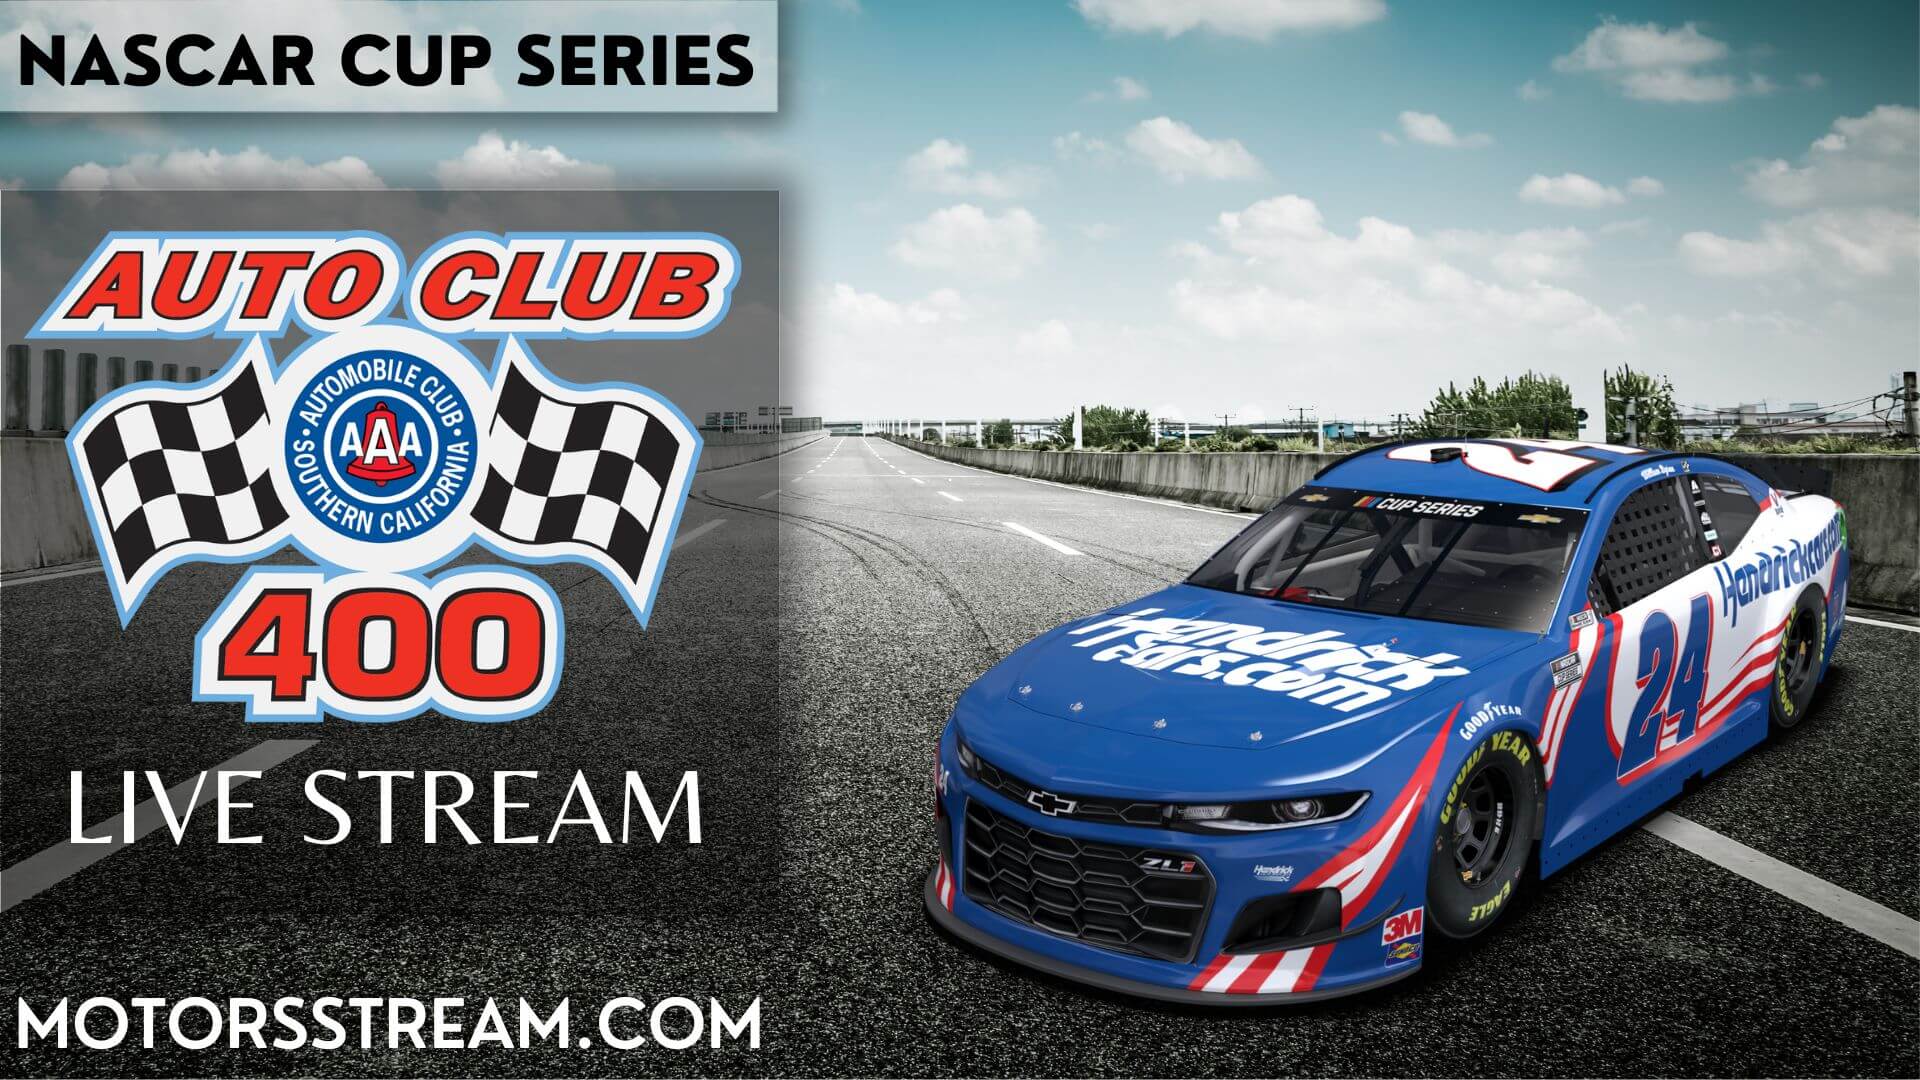 2019 Auto Club 400 NASCAR Cup Live Stream